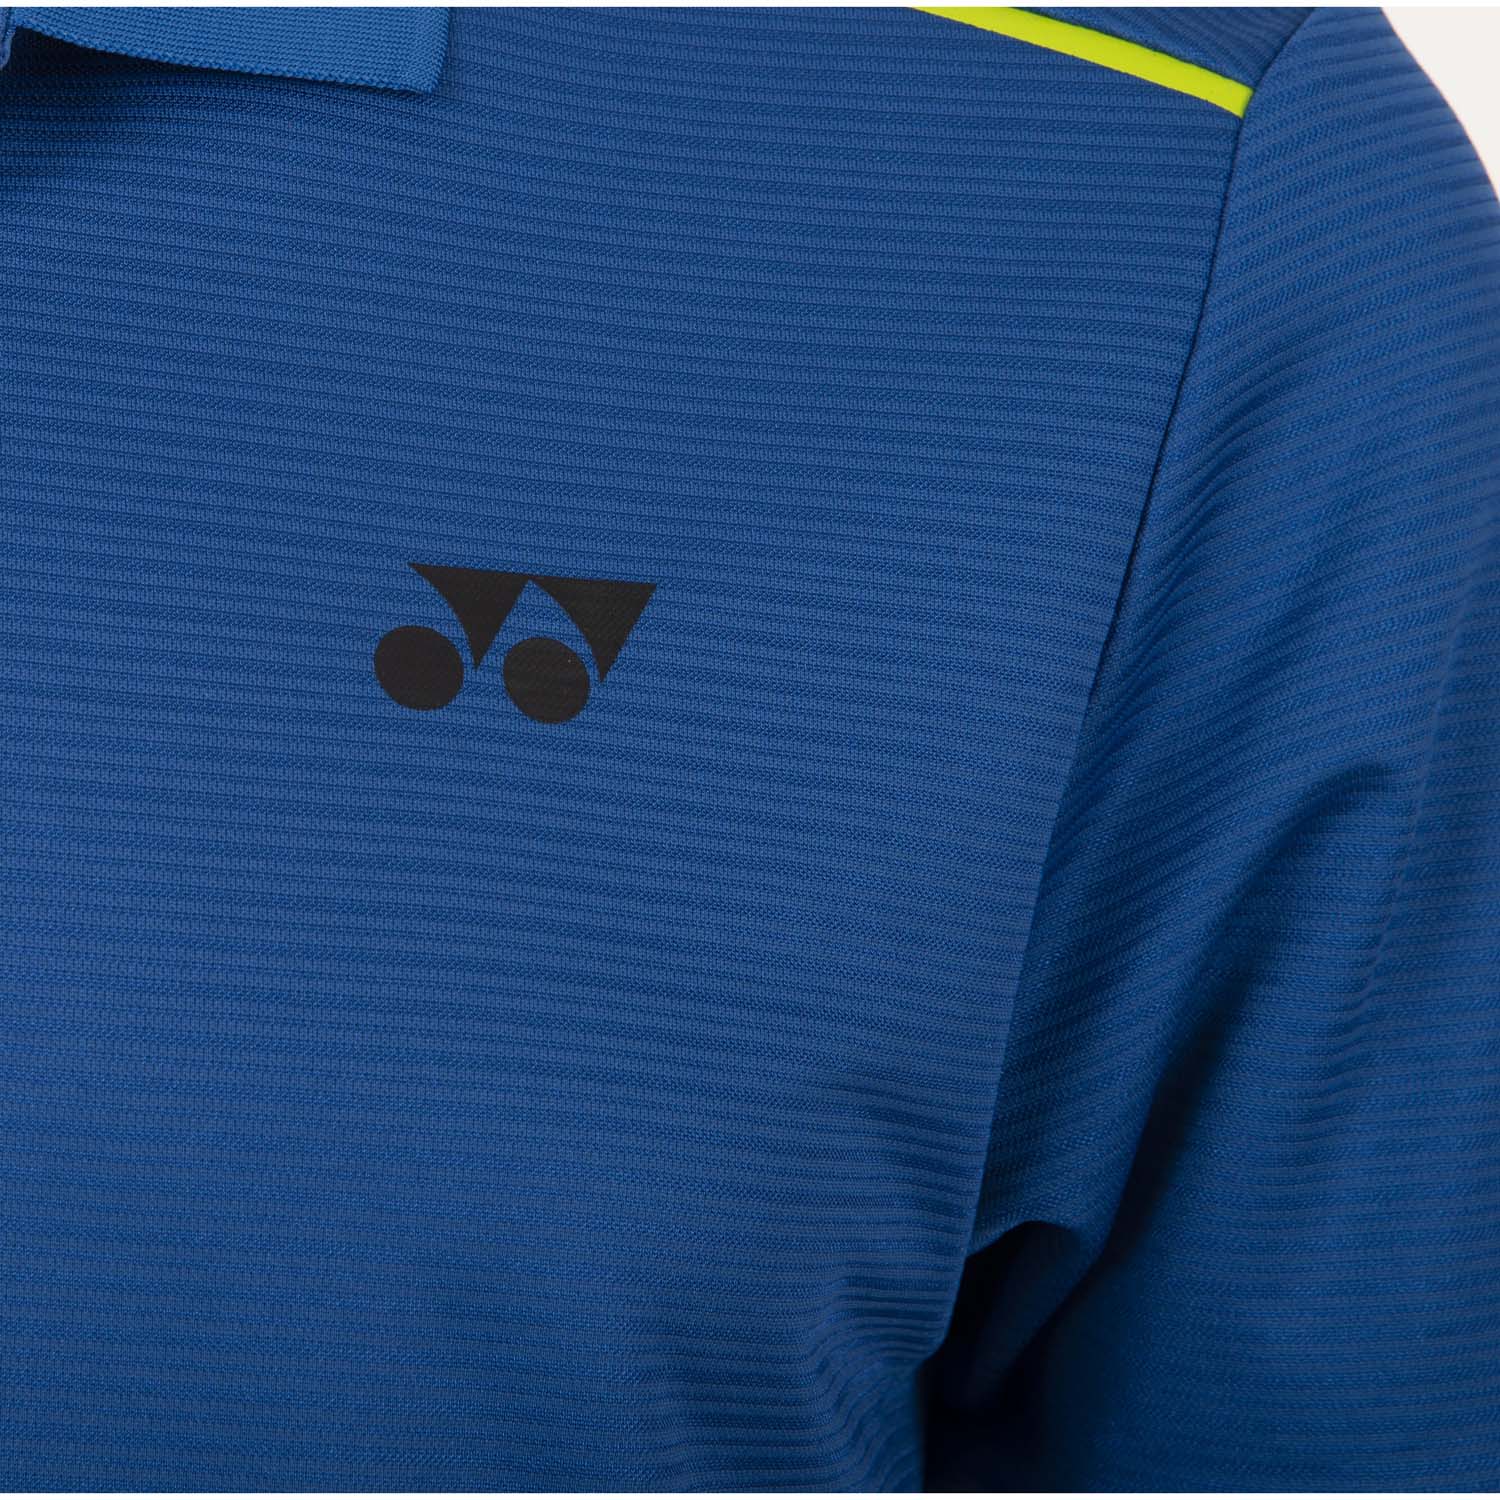 Yonex 1717 Junior Badminton Polo T Shirt - Best Price online Prokicksports.com